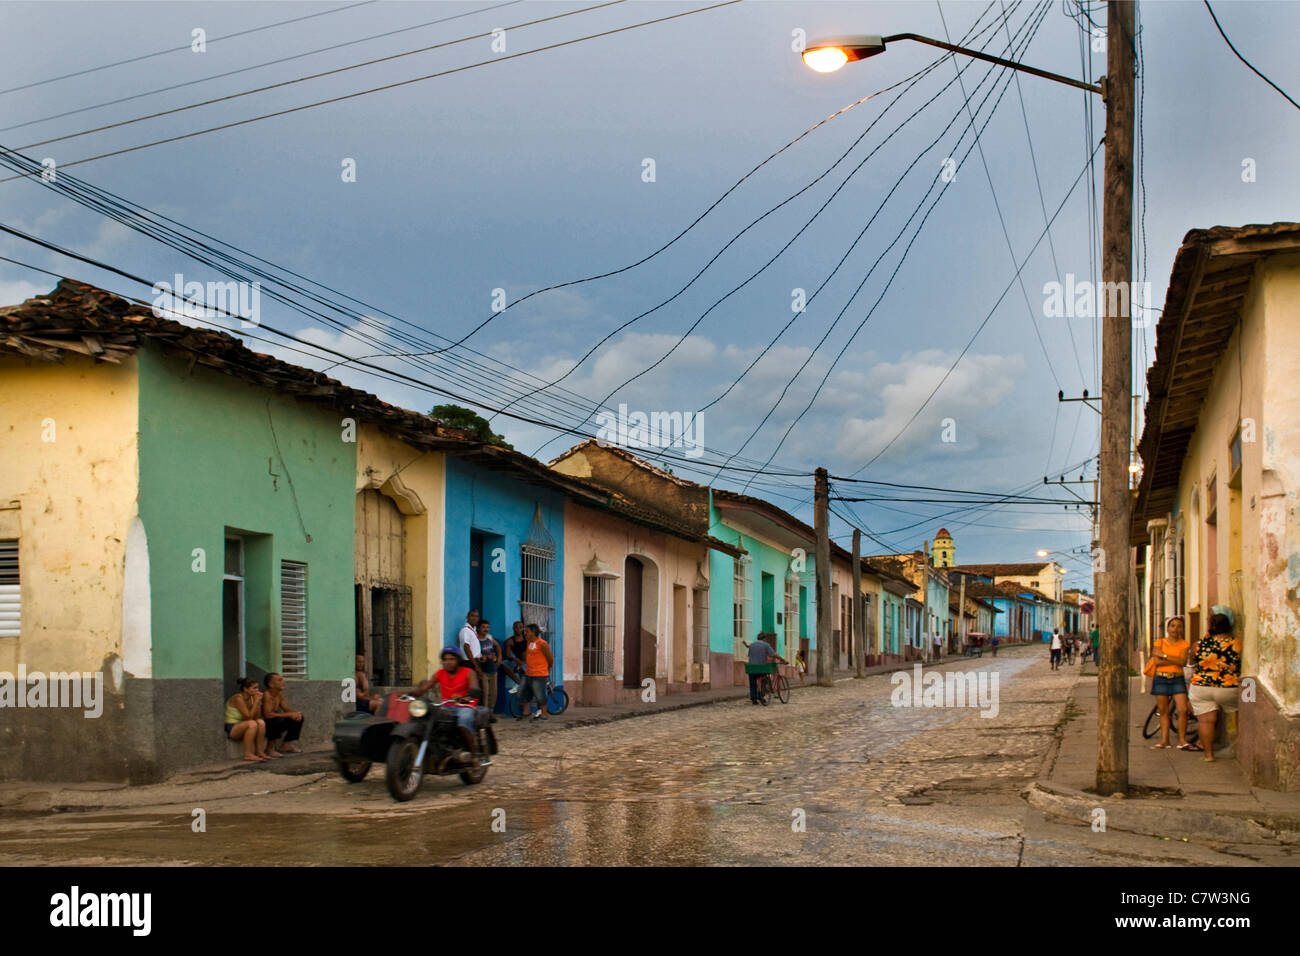 Cuba, Trinidad, urban scene Stock Photo